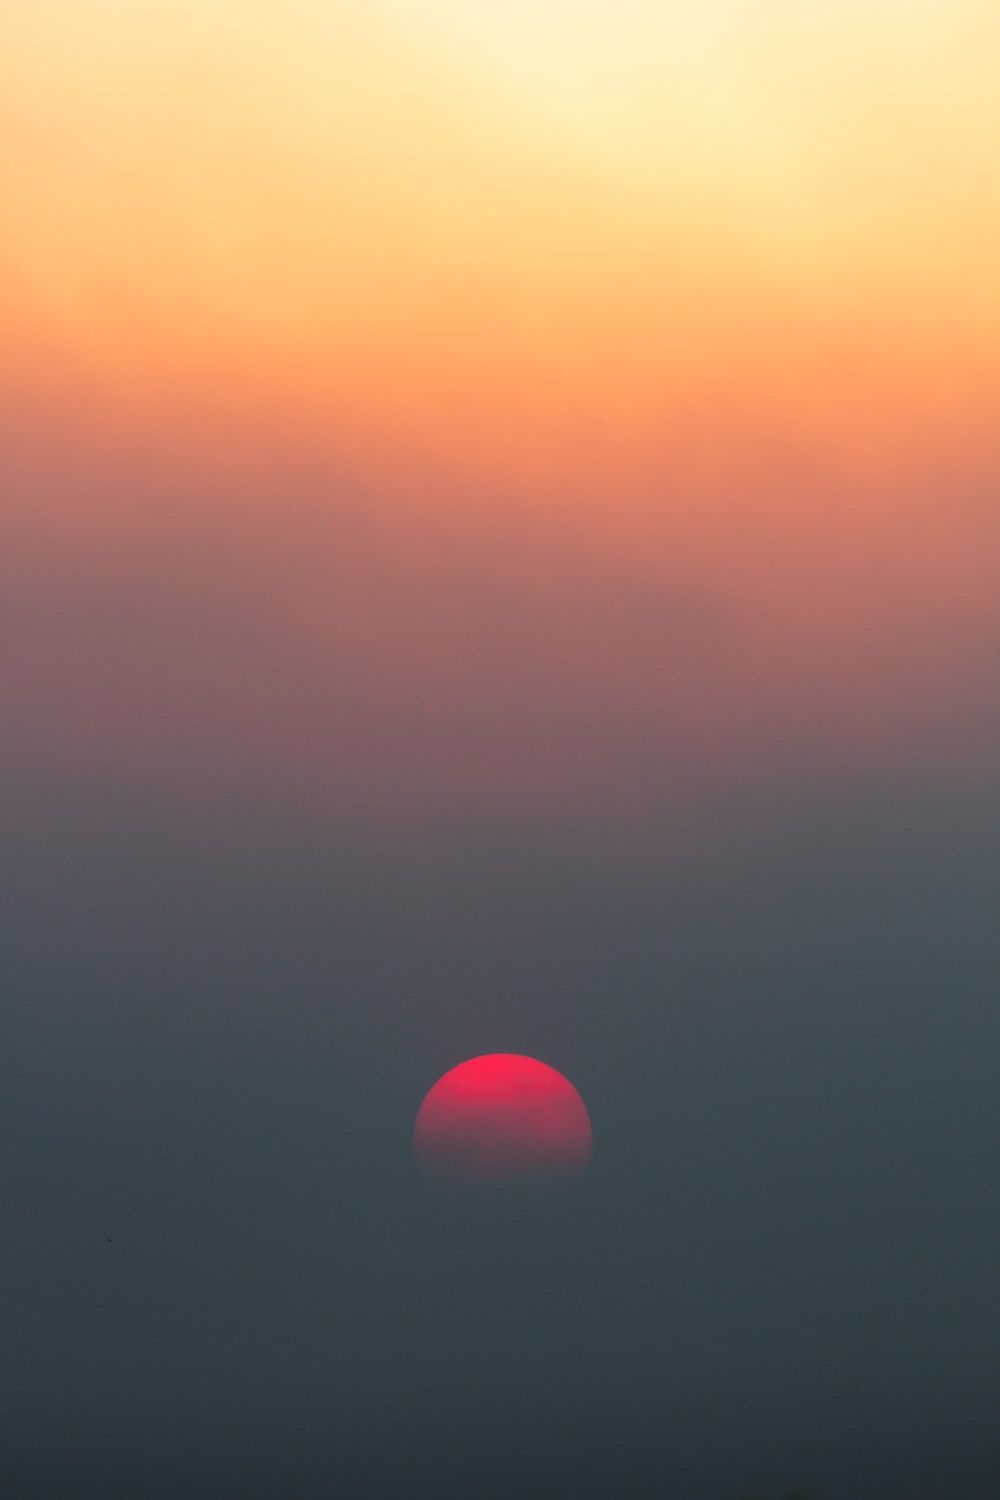 Red sun during golden hour - Sun